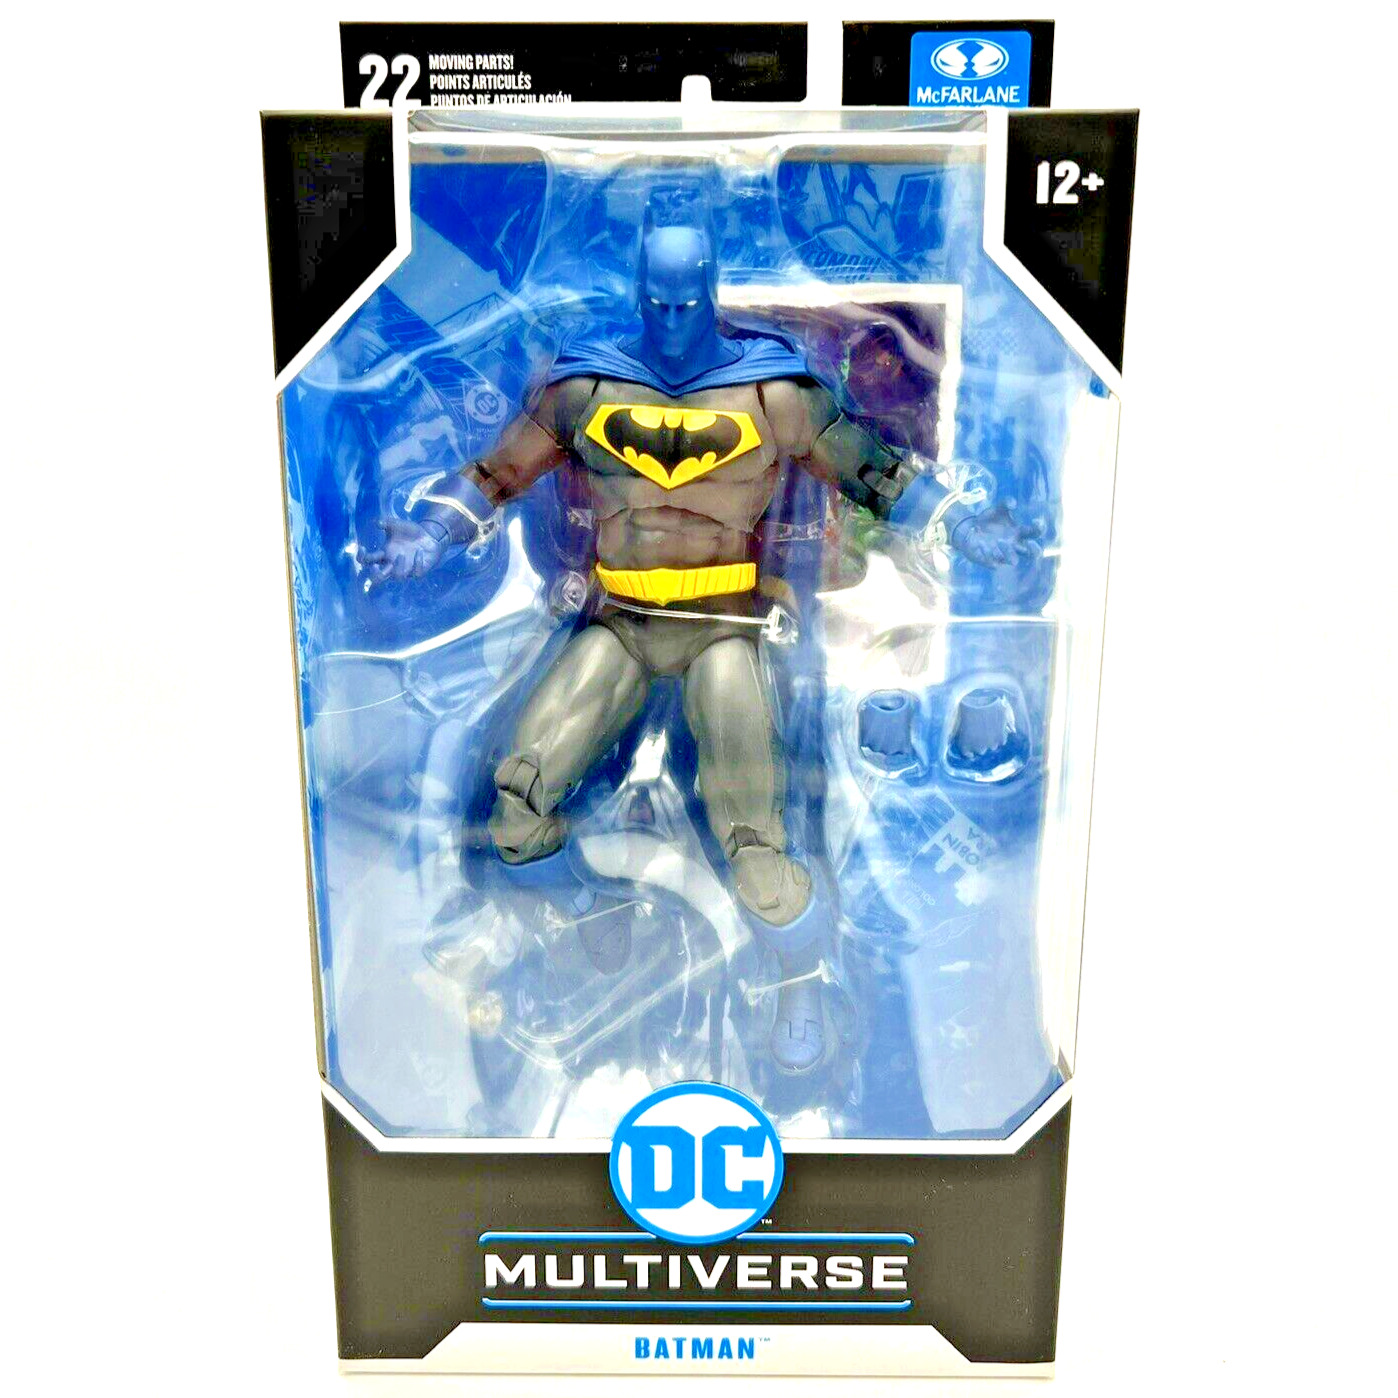 McFarlane Toys DC Multiverse BATMAN Superman: Speeding Bullets Action Figure